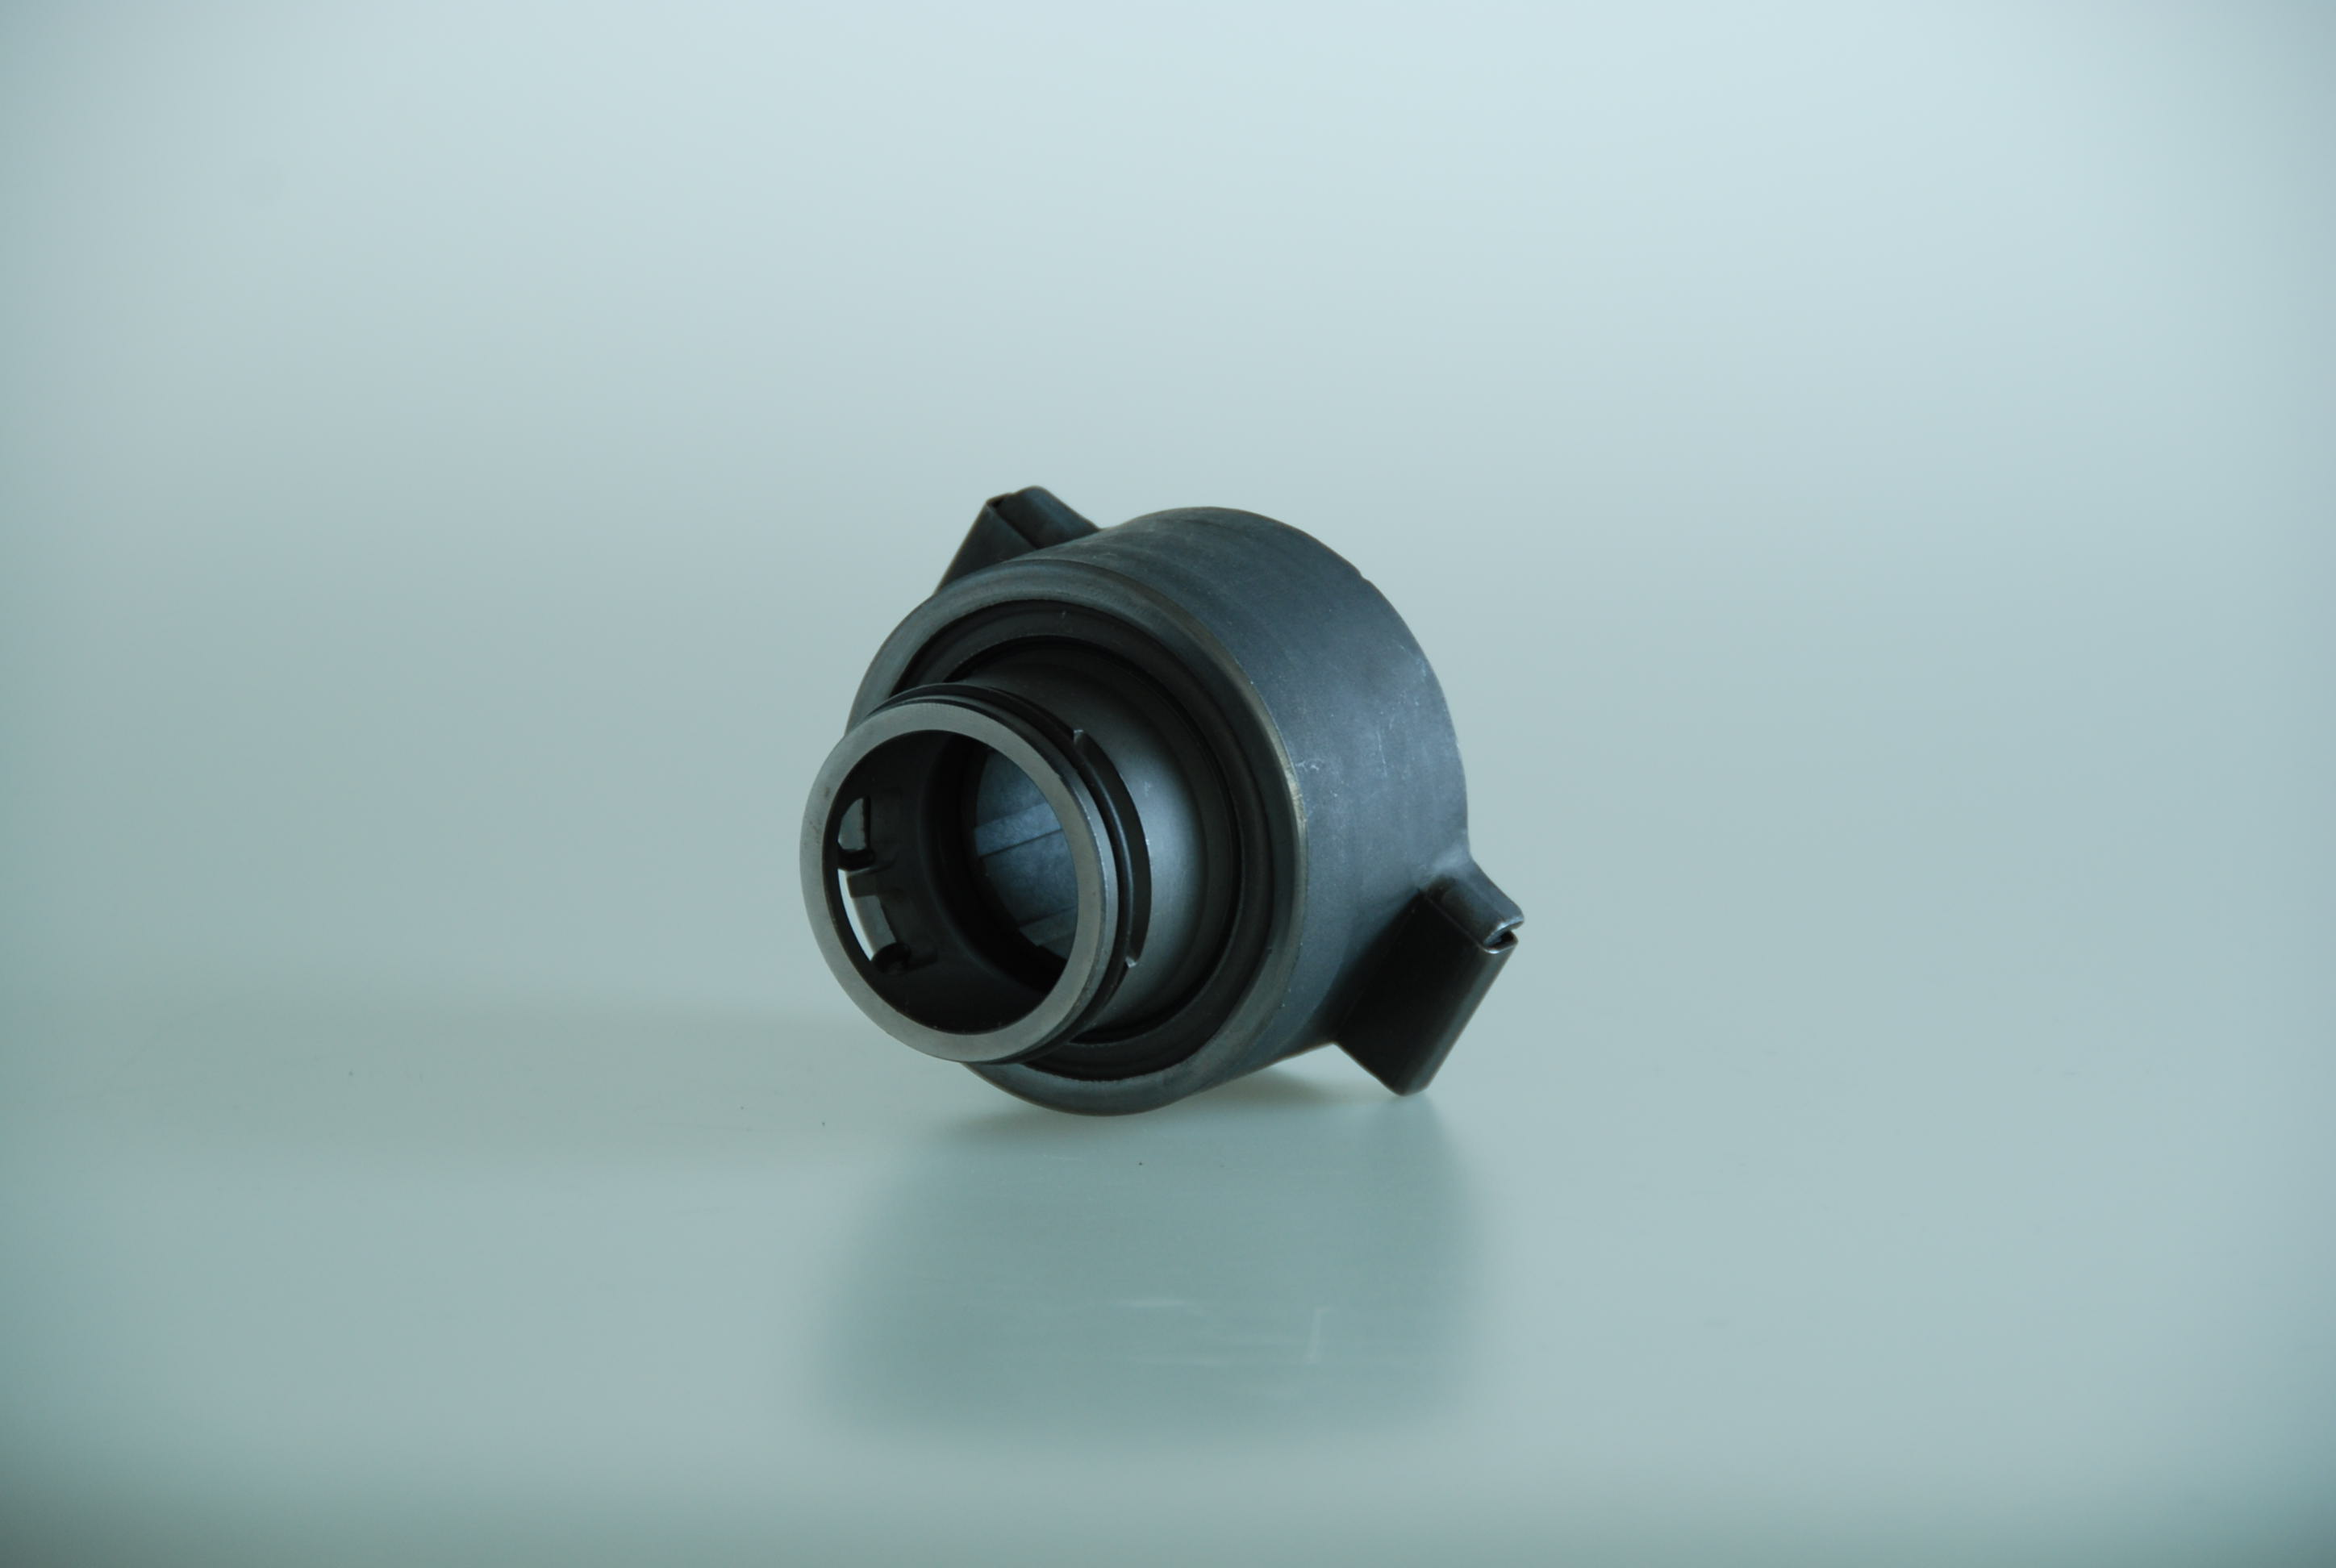 Thrust bearing made in Italy, Getrag 6 speed & 5 speed